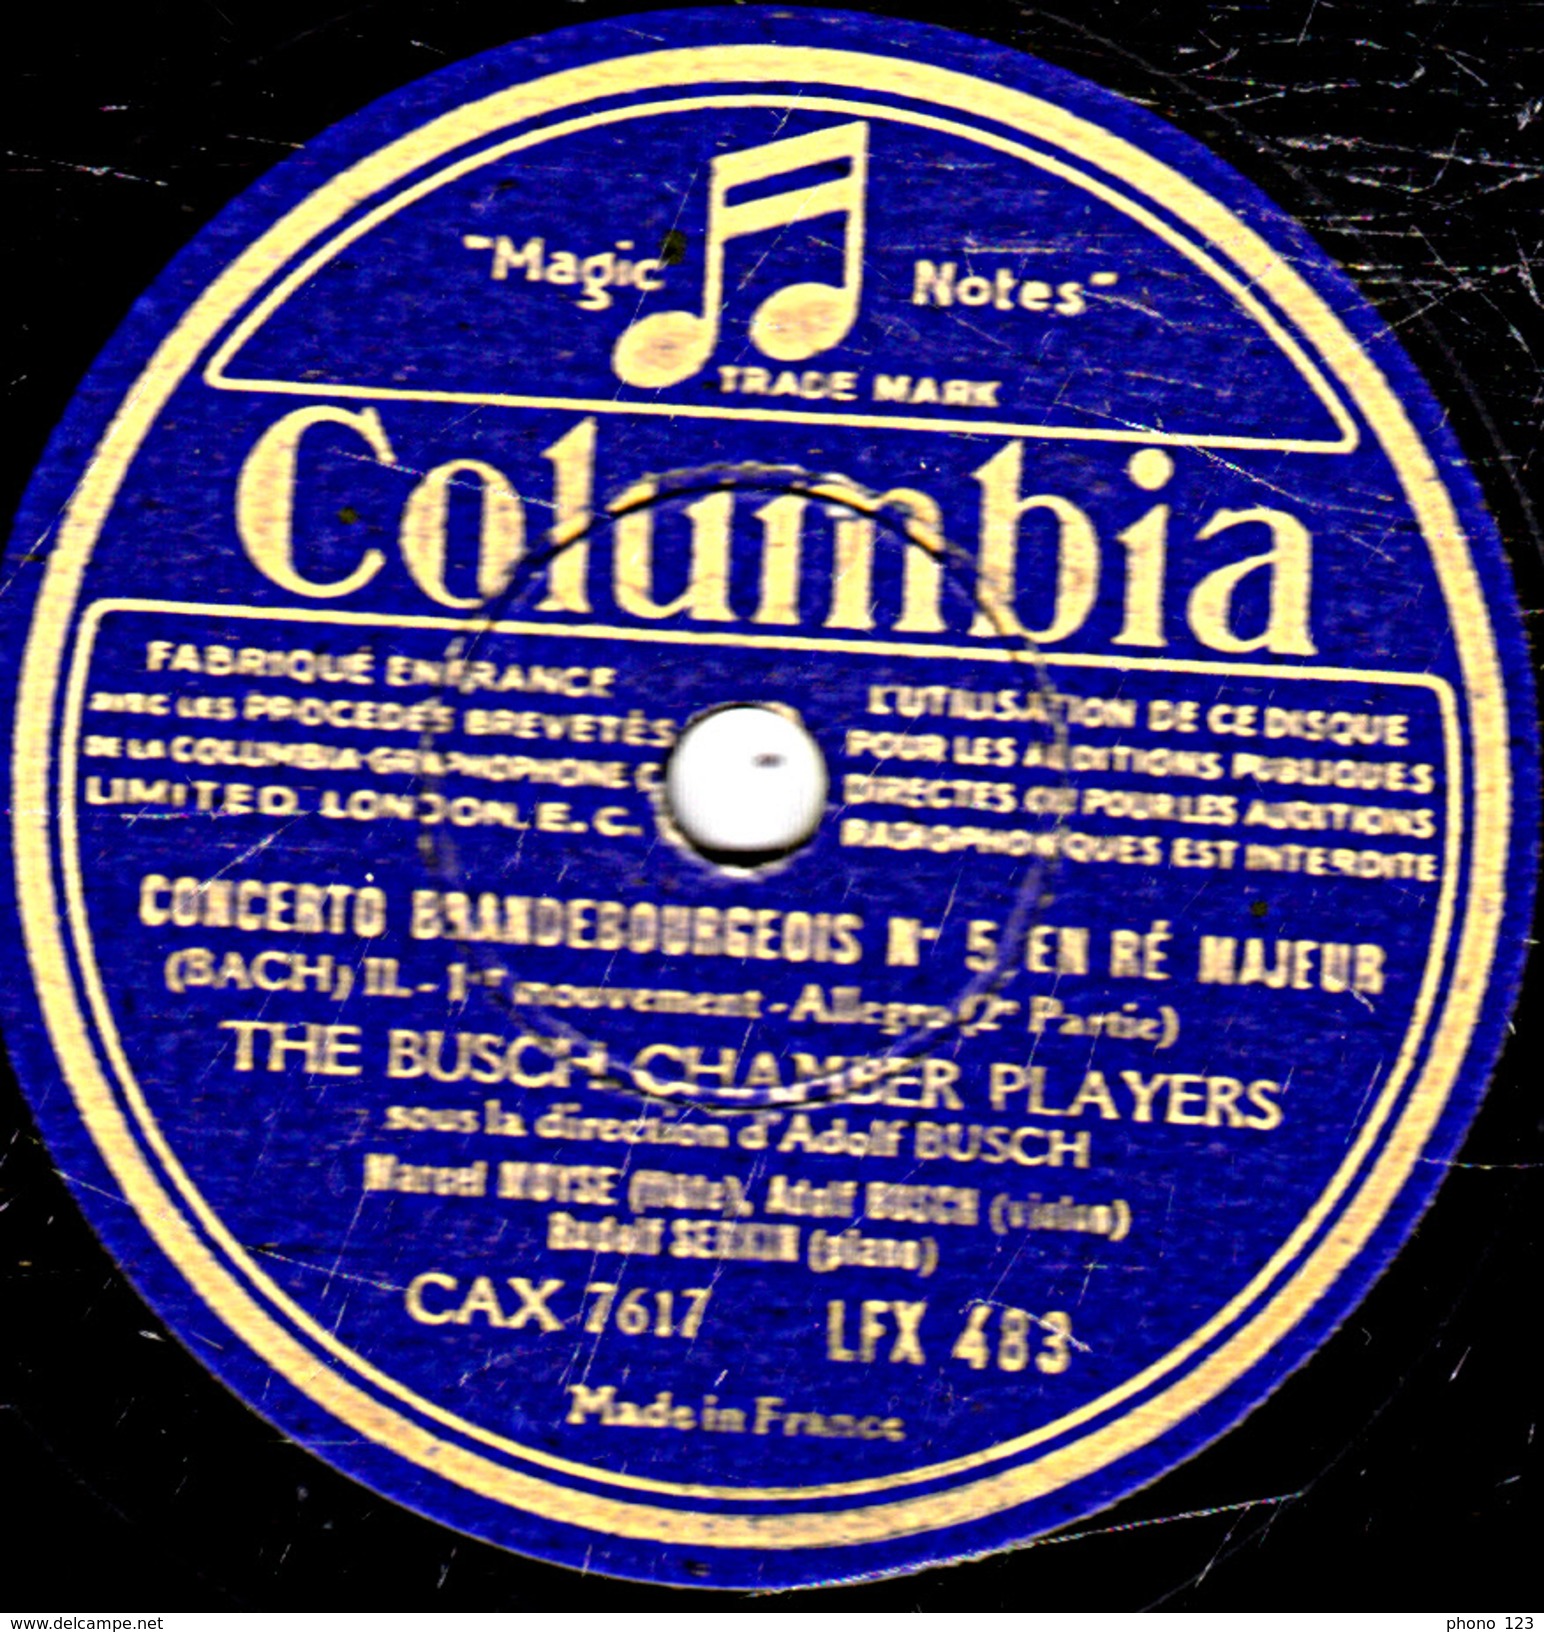 78 T - 30 Cm. - état TB - THE BUSCH CHAMBER PLAYERS - CONCERTO BRANDEBOURGEOIS N°5 (BACH) 1re Et 2e Parties - 78 T - Disques Pour Gramophone